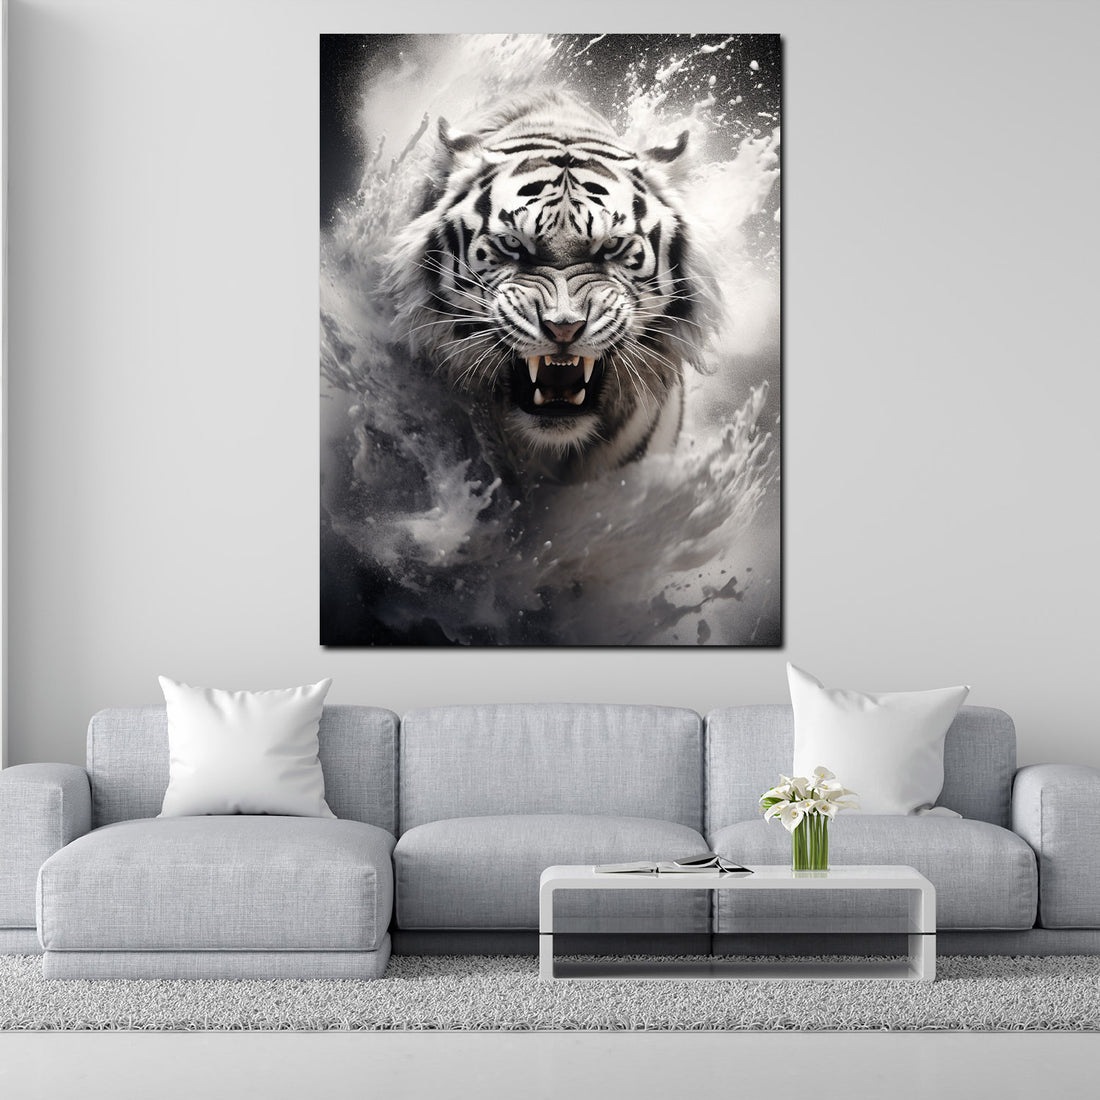 Wandbild Tiger frontal schwarz weiß